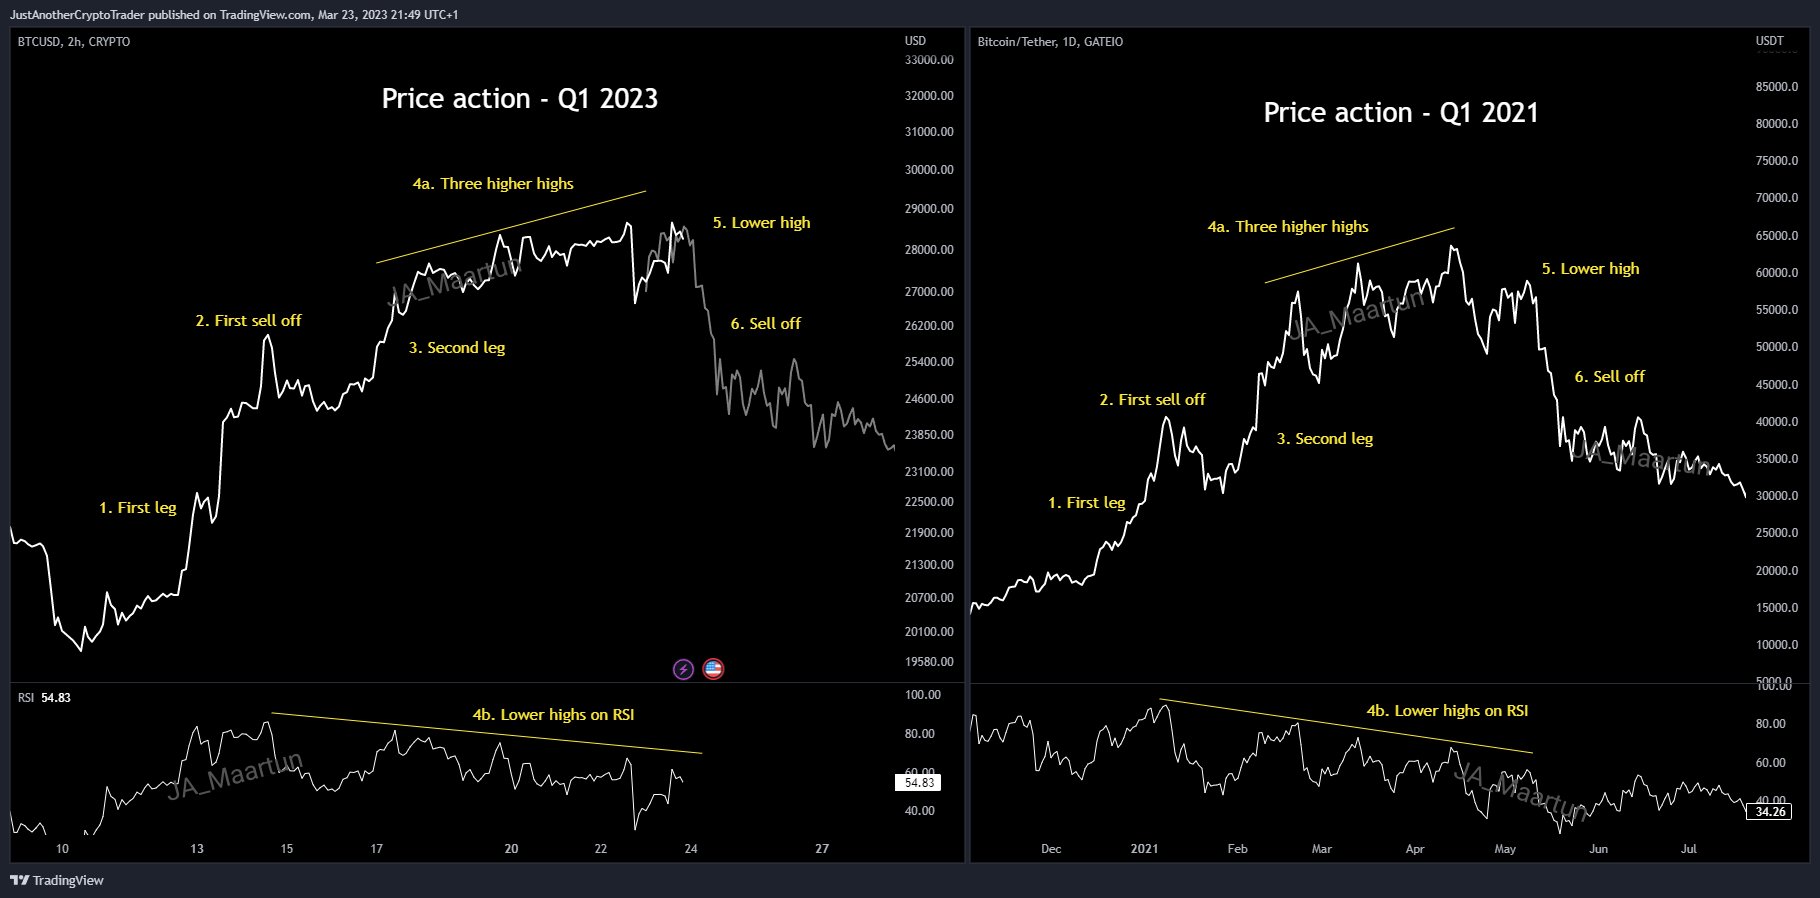 Bitcoin Price Action Mirrors Q1 2021, Volatility Ahead? - Crypto Insight